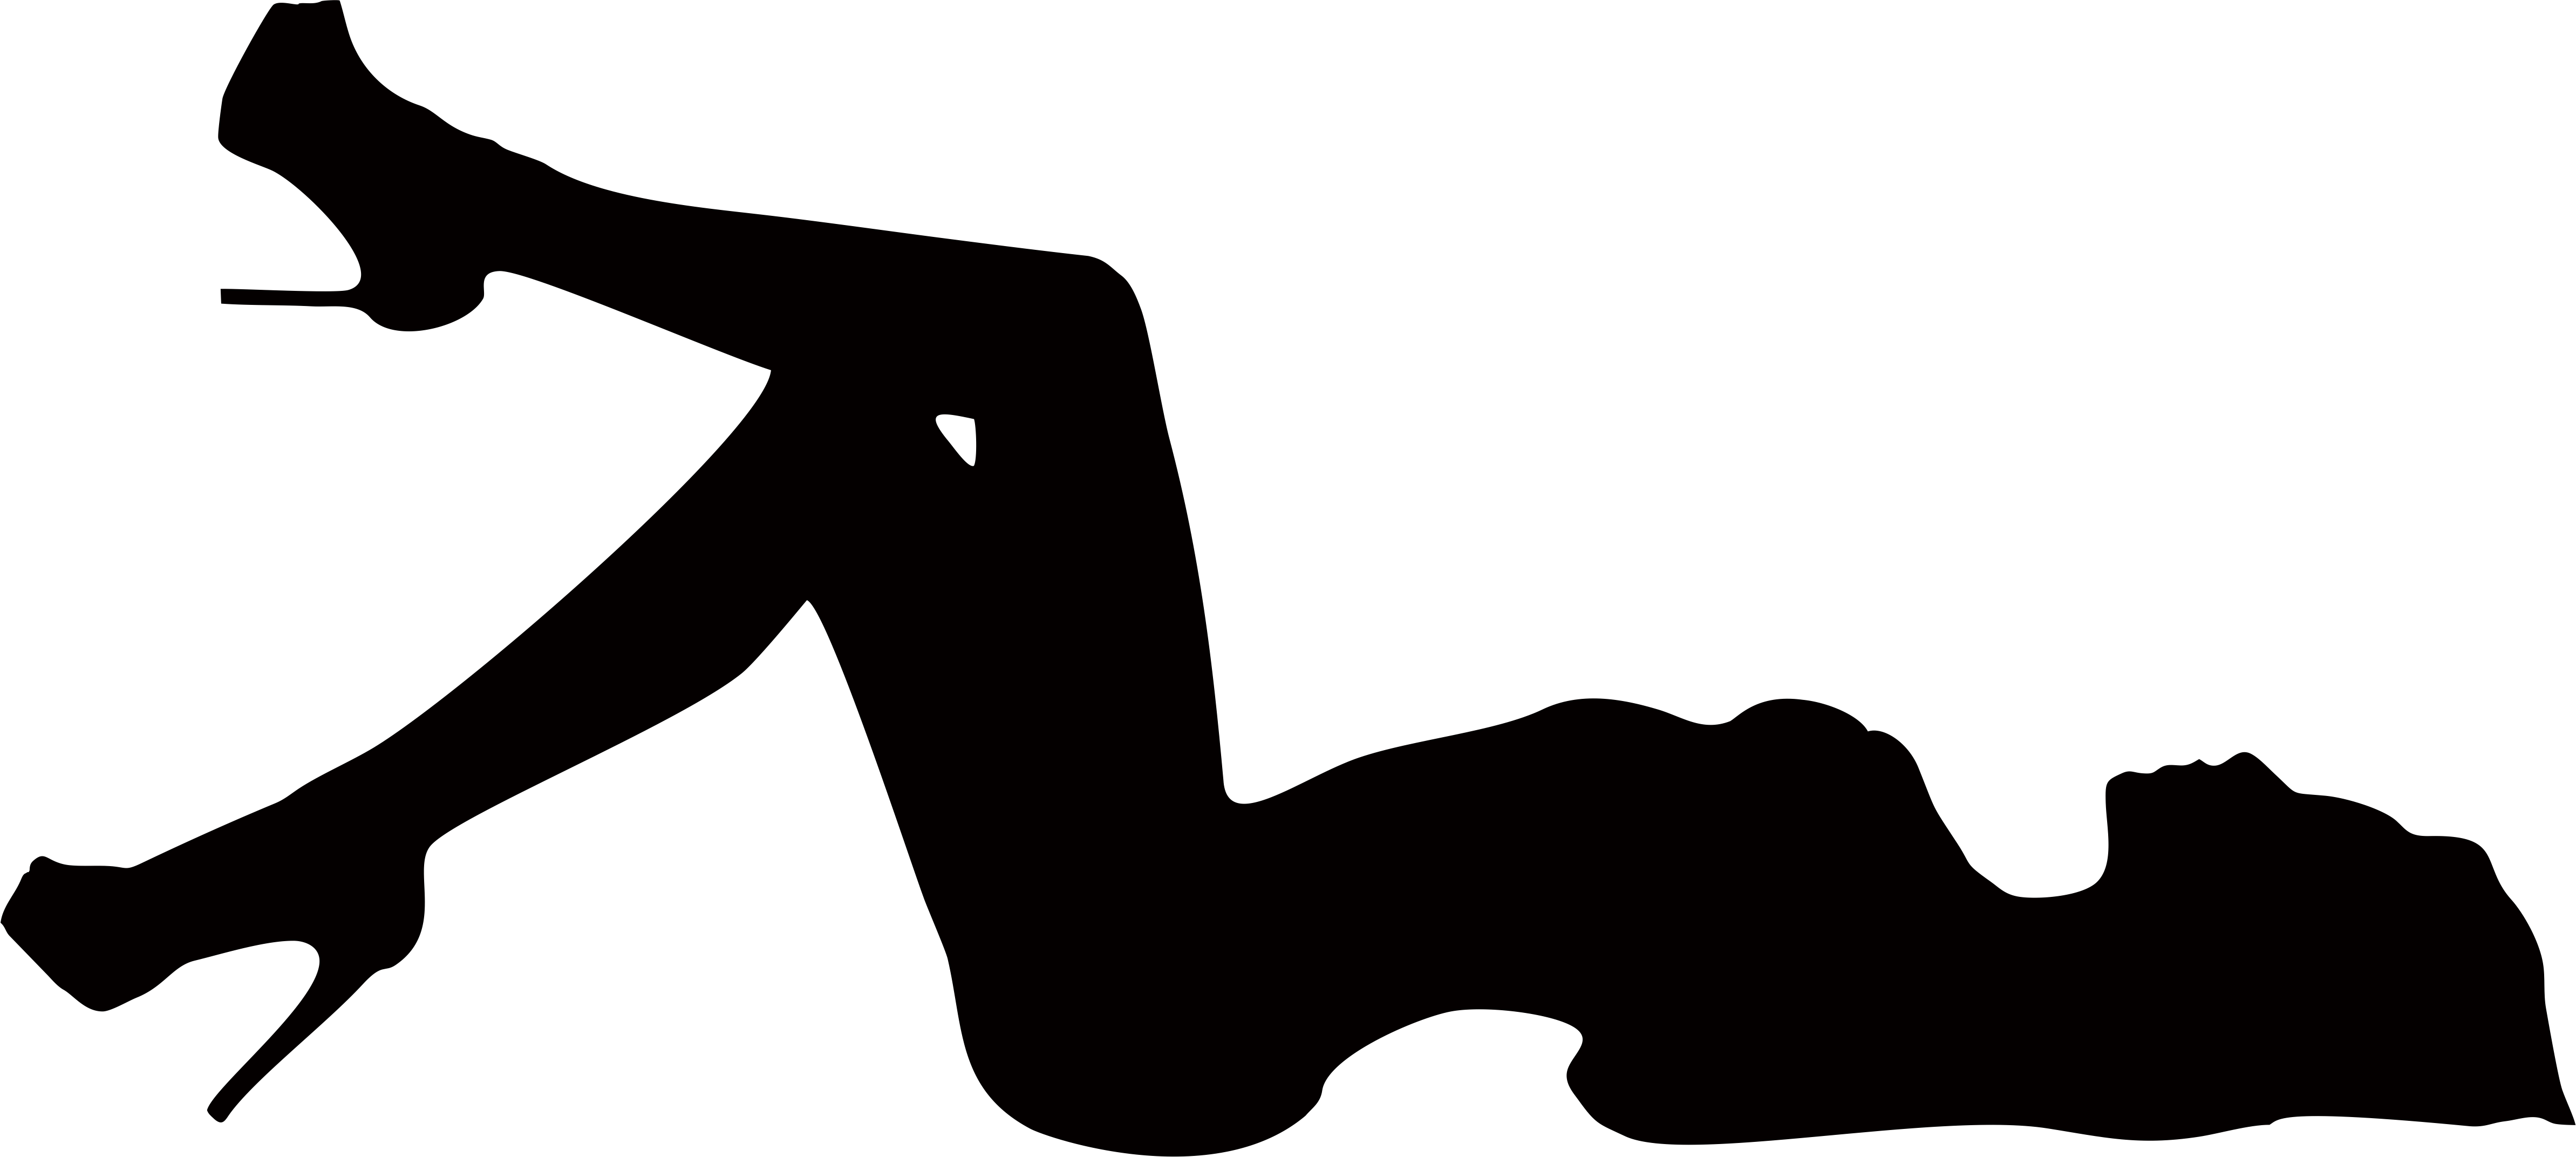 Bdsm symbol silhouette transparent background